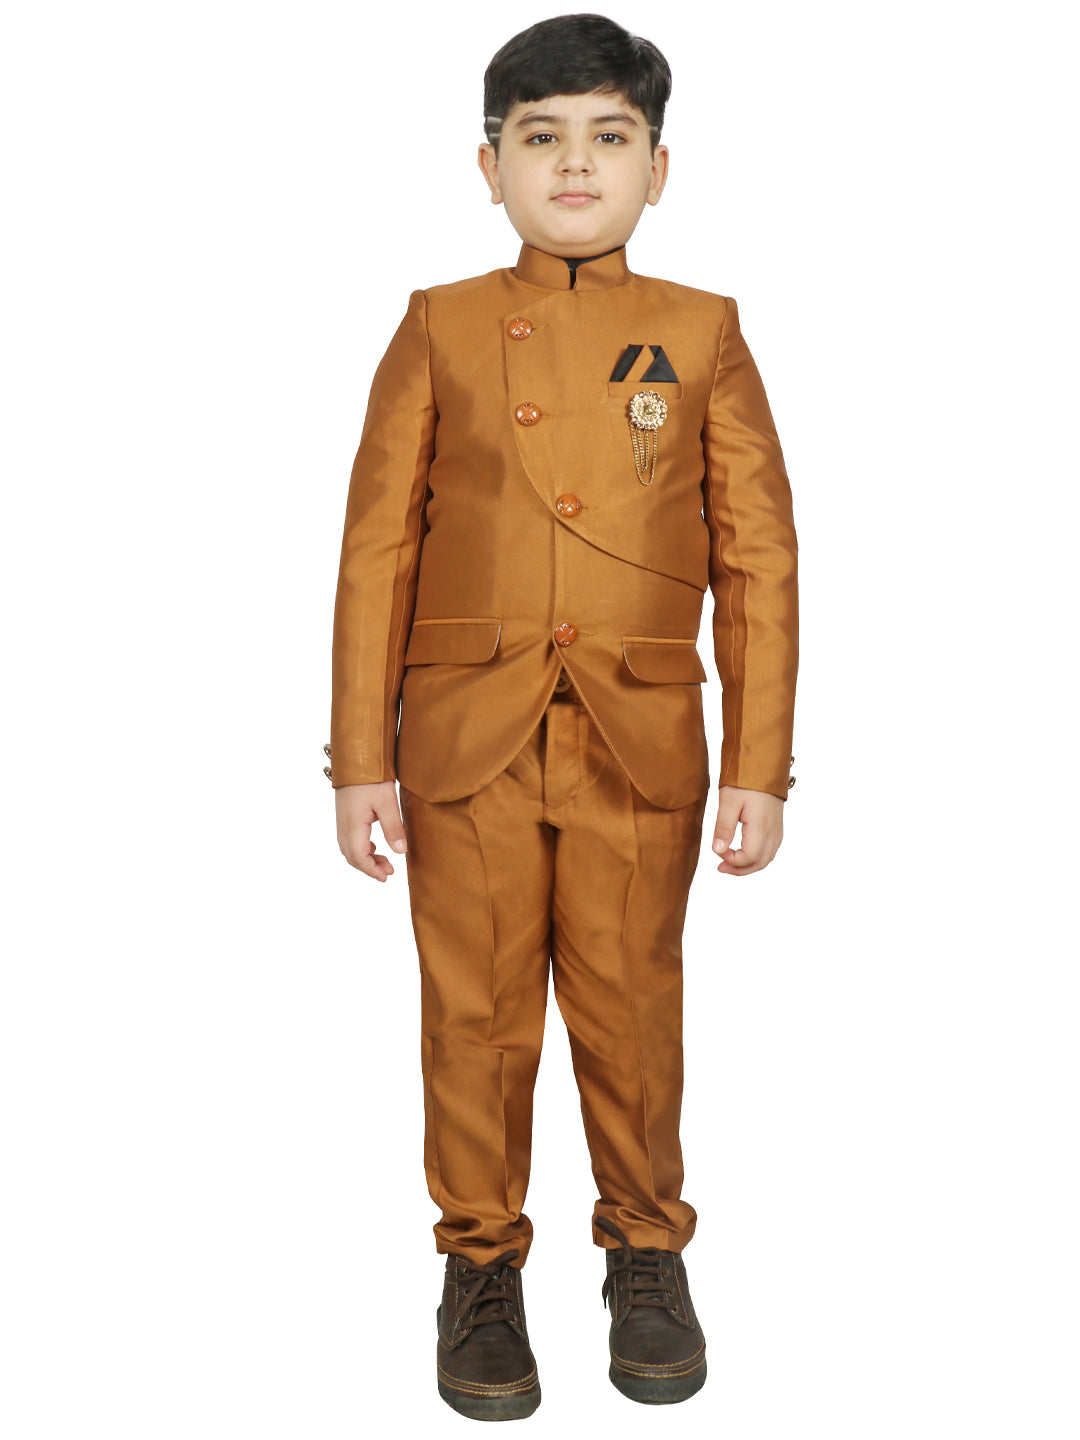 SG YUVRAJ Suits & Sets For Boys (CP-1060)